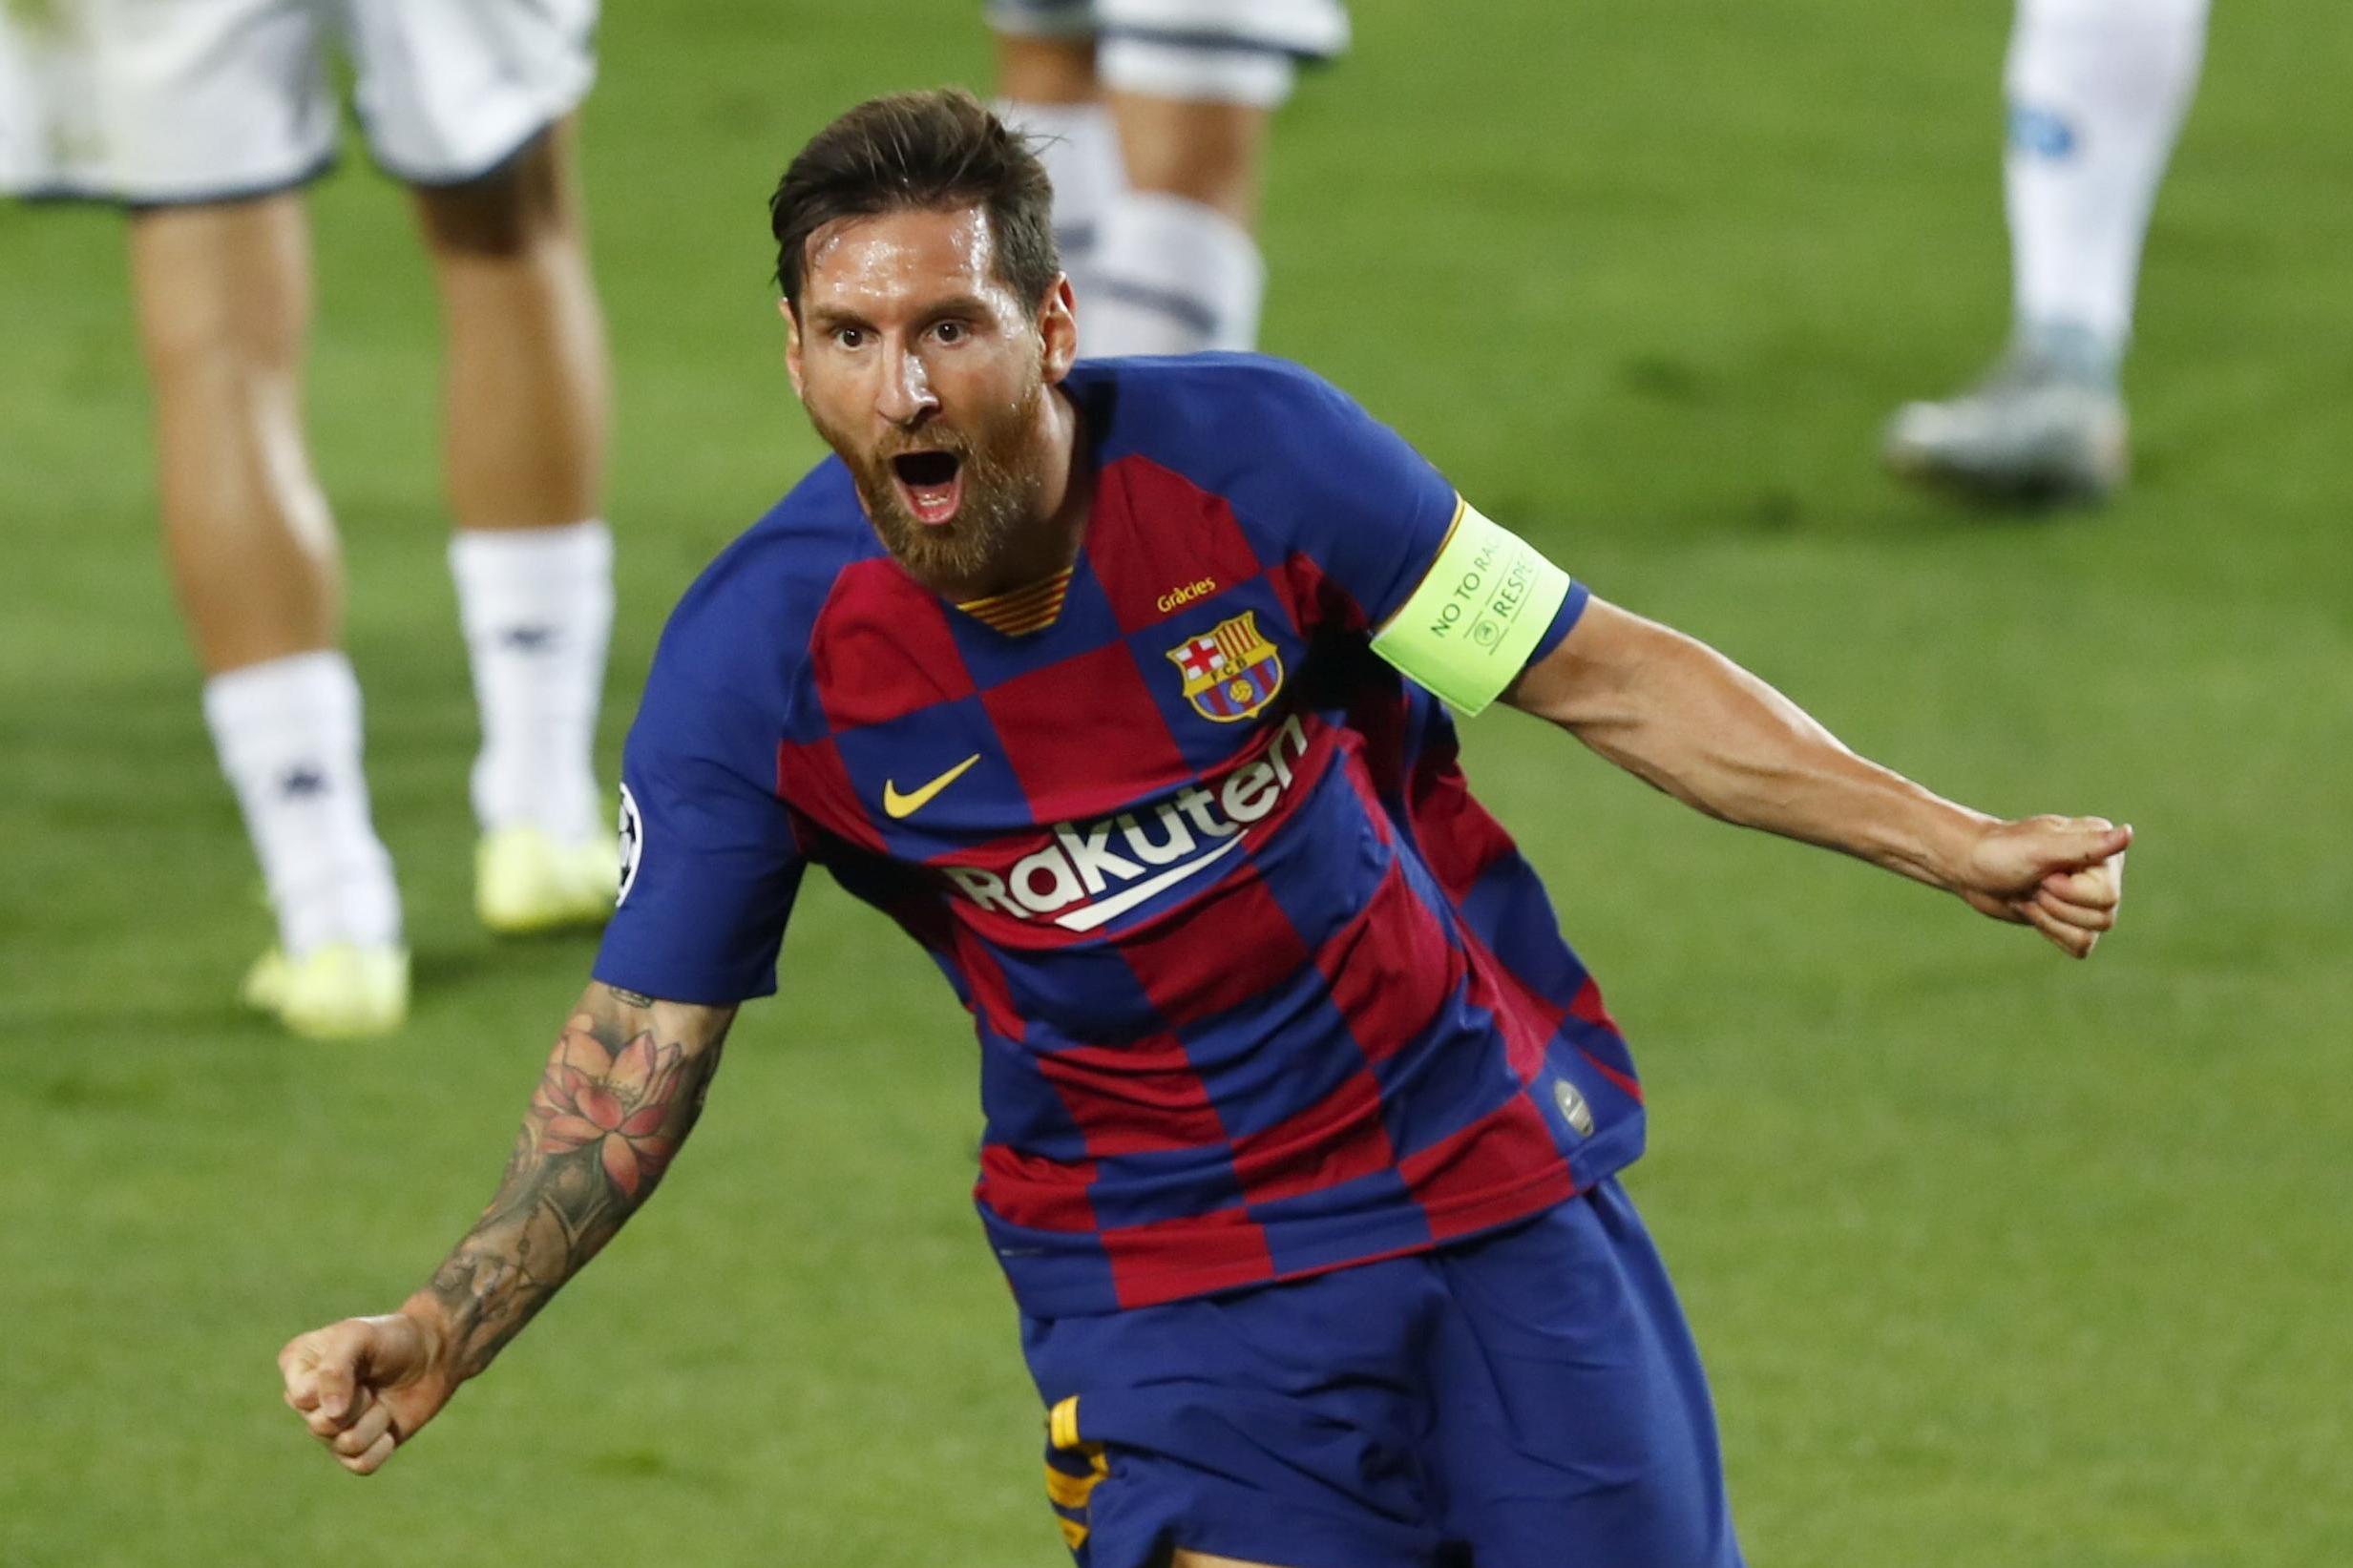 Lionel Messi Follow Instagram Manchester City dan Chelsea, Pertanda Apa? 